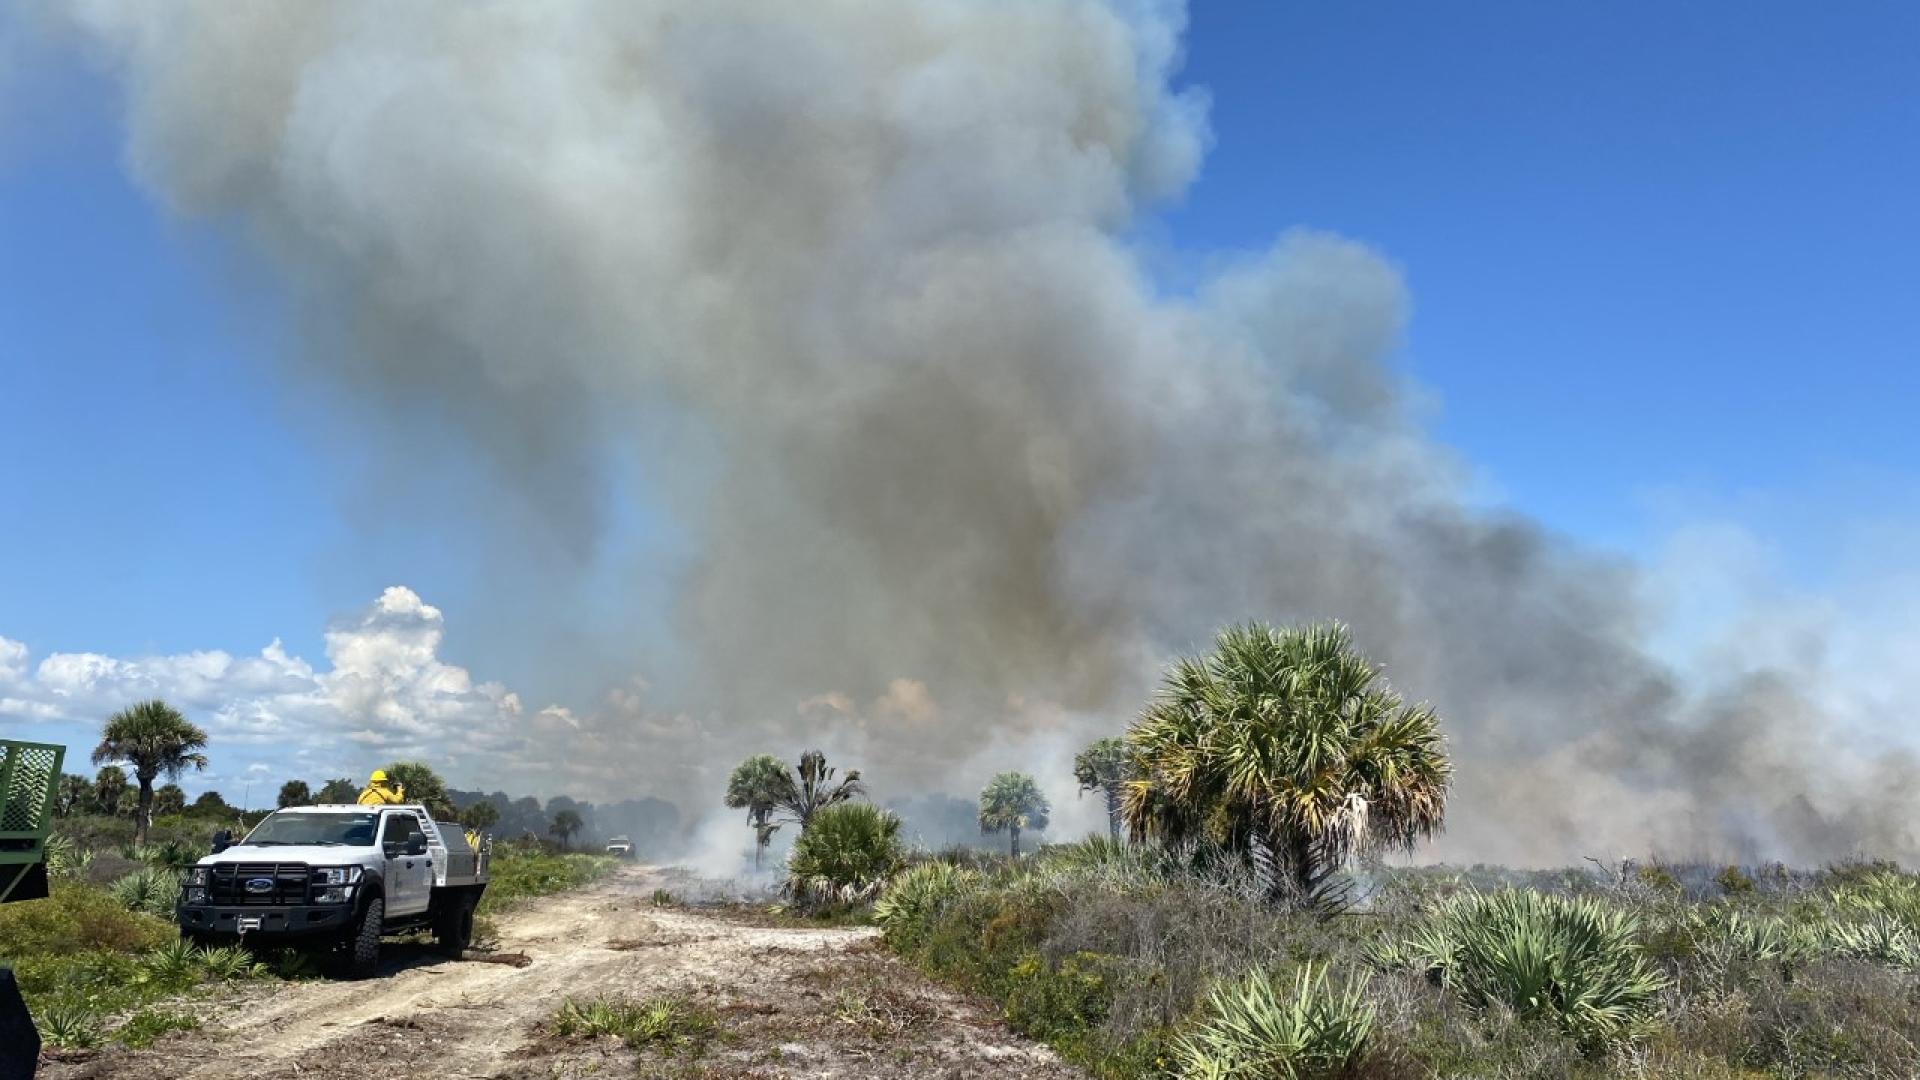 Smoke rises from a fire burning in a coastal scrub landscape